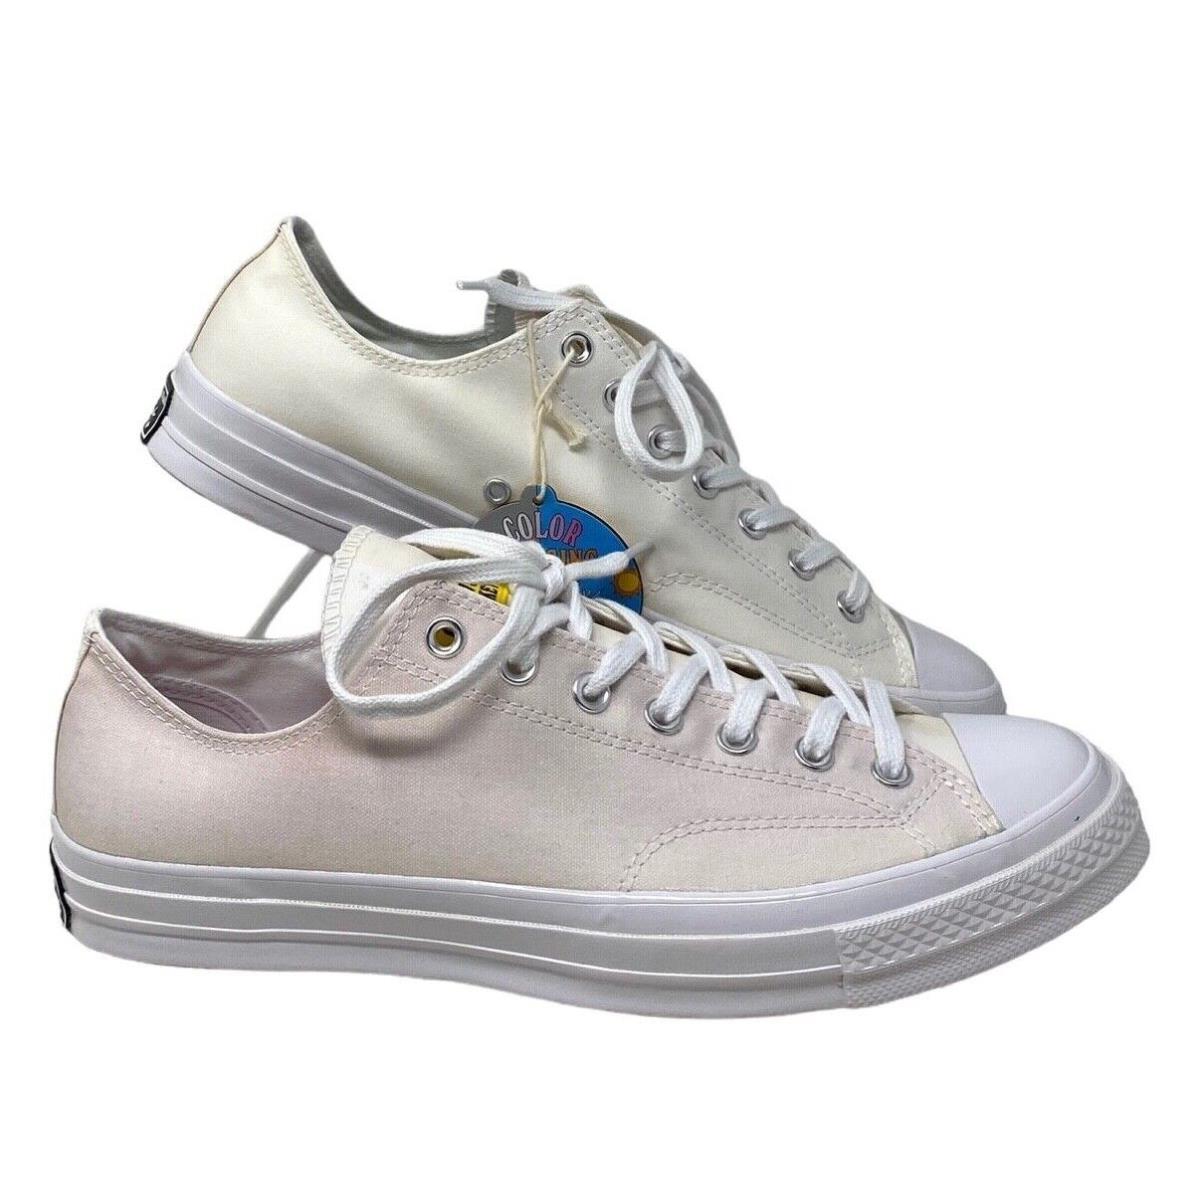 Converse Chuck 70 OX Low Top Shoes White Canvas Men Size Skate Sneakers 166599C